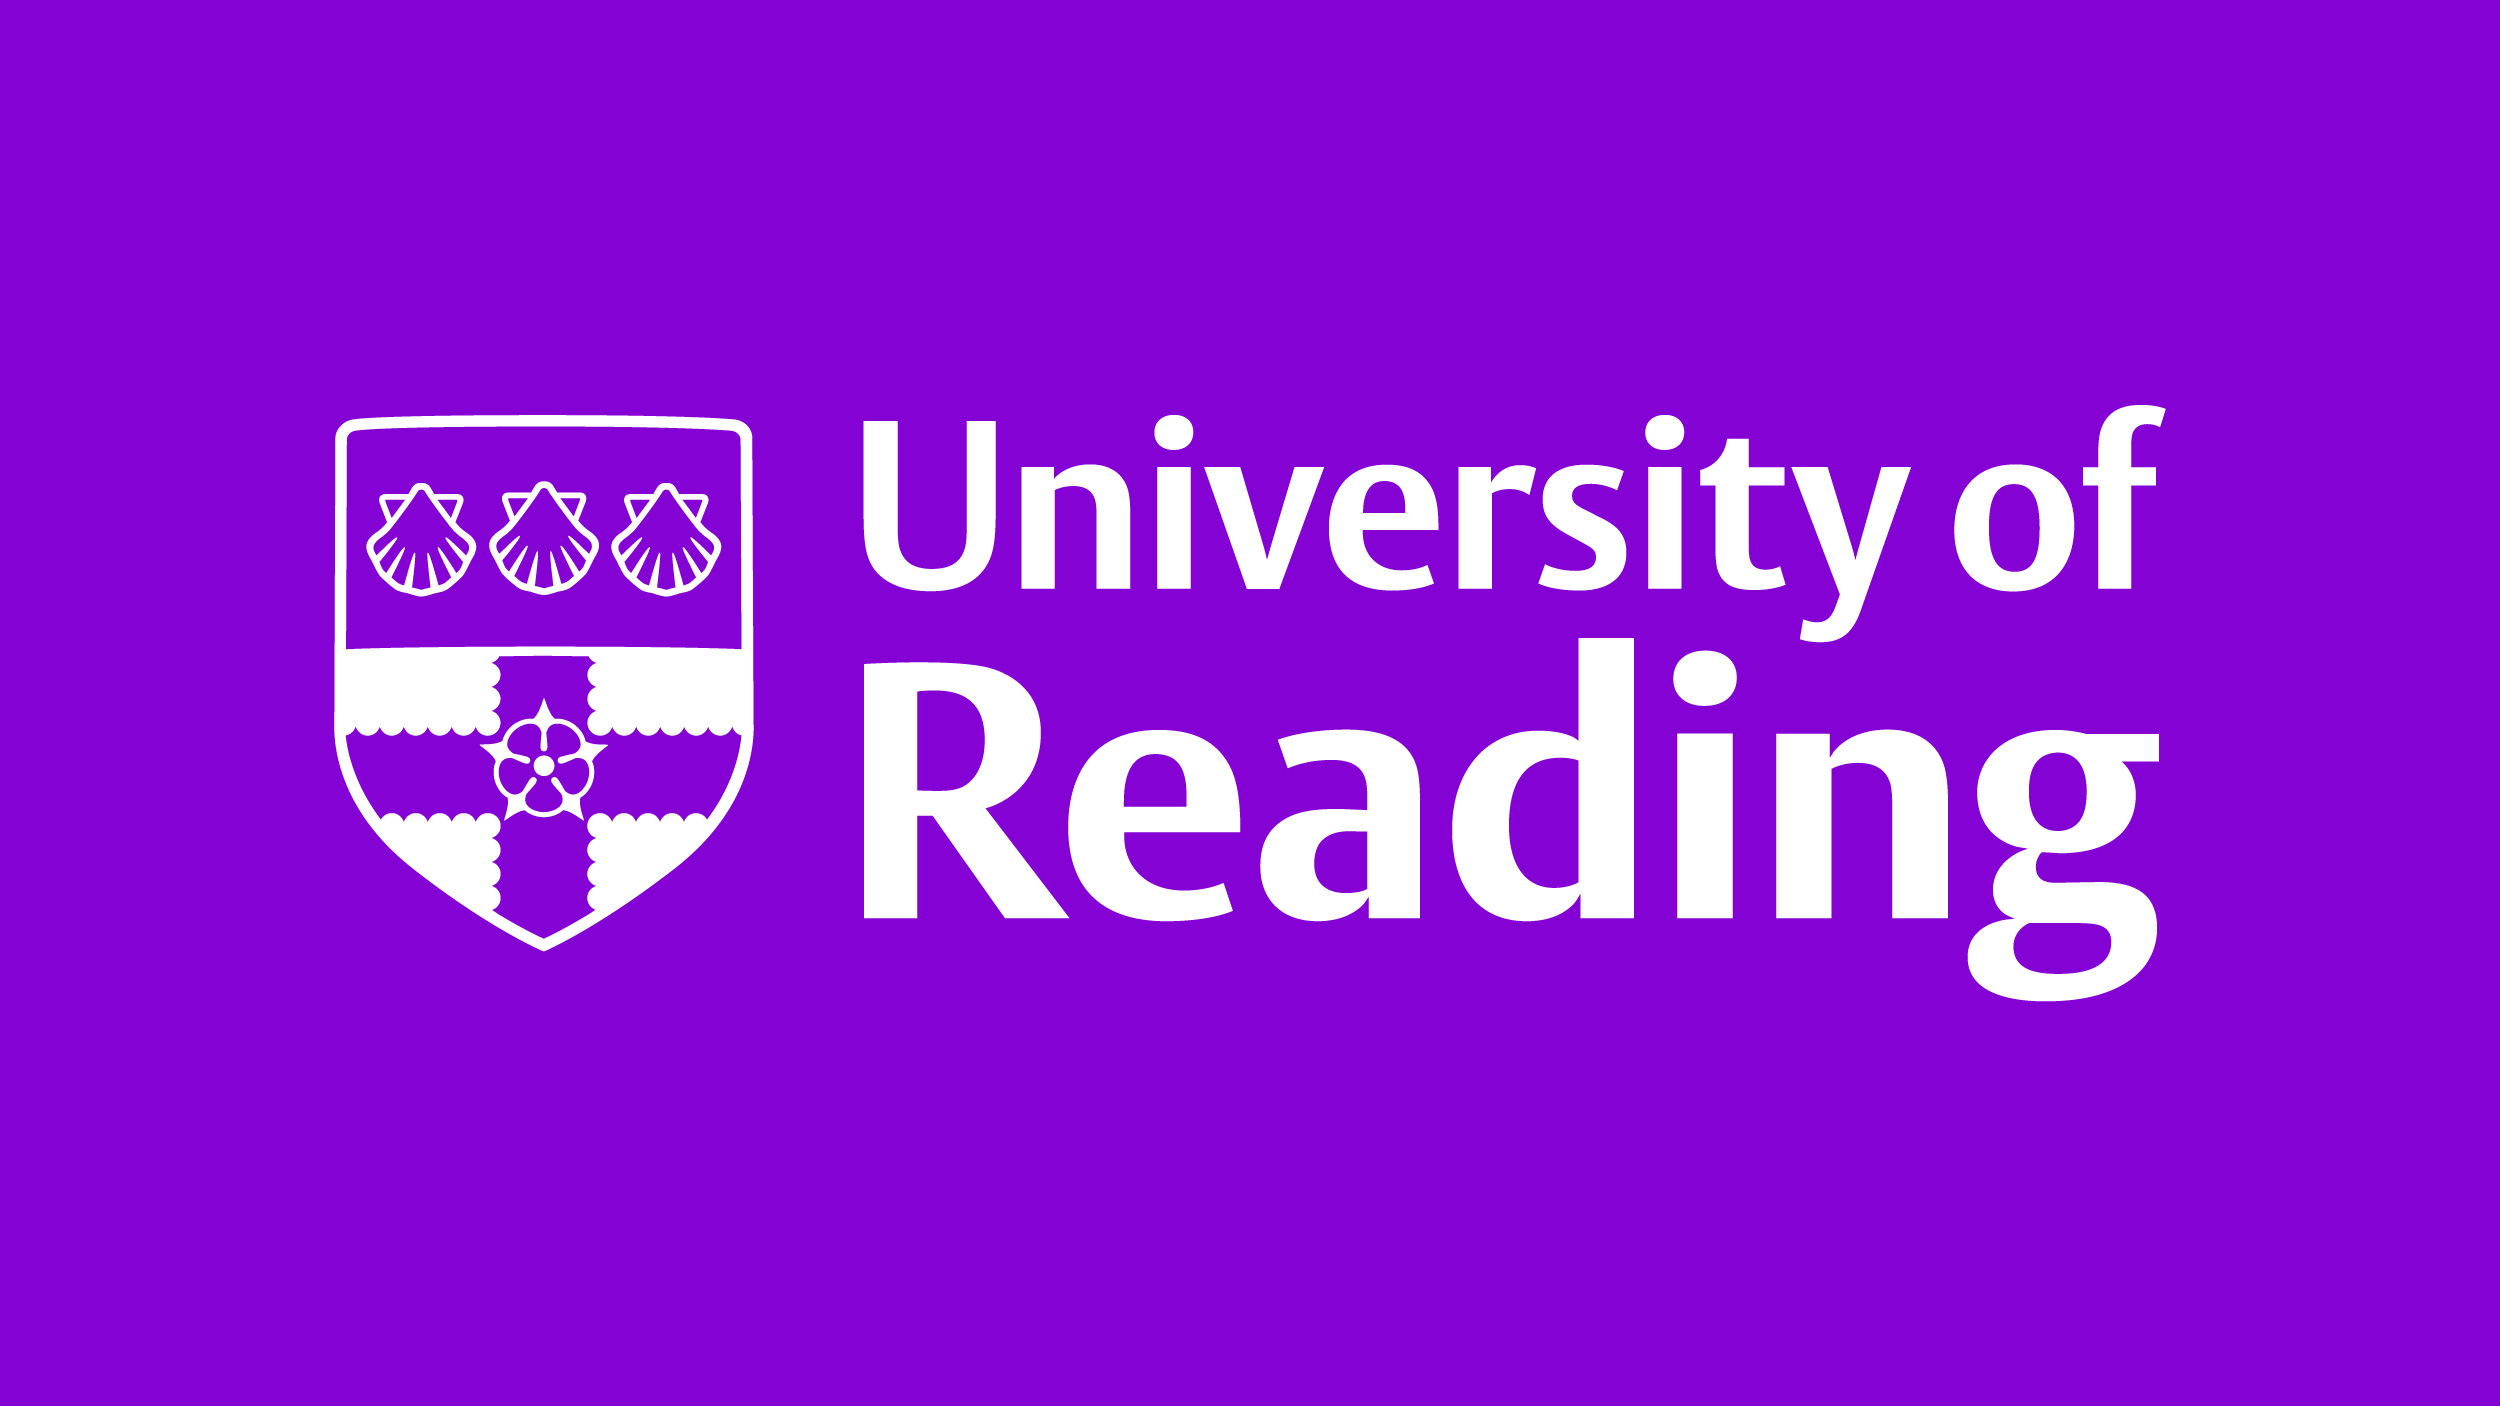 University of Reading logo on a purple background.